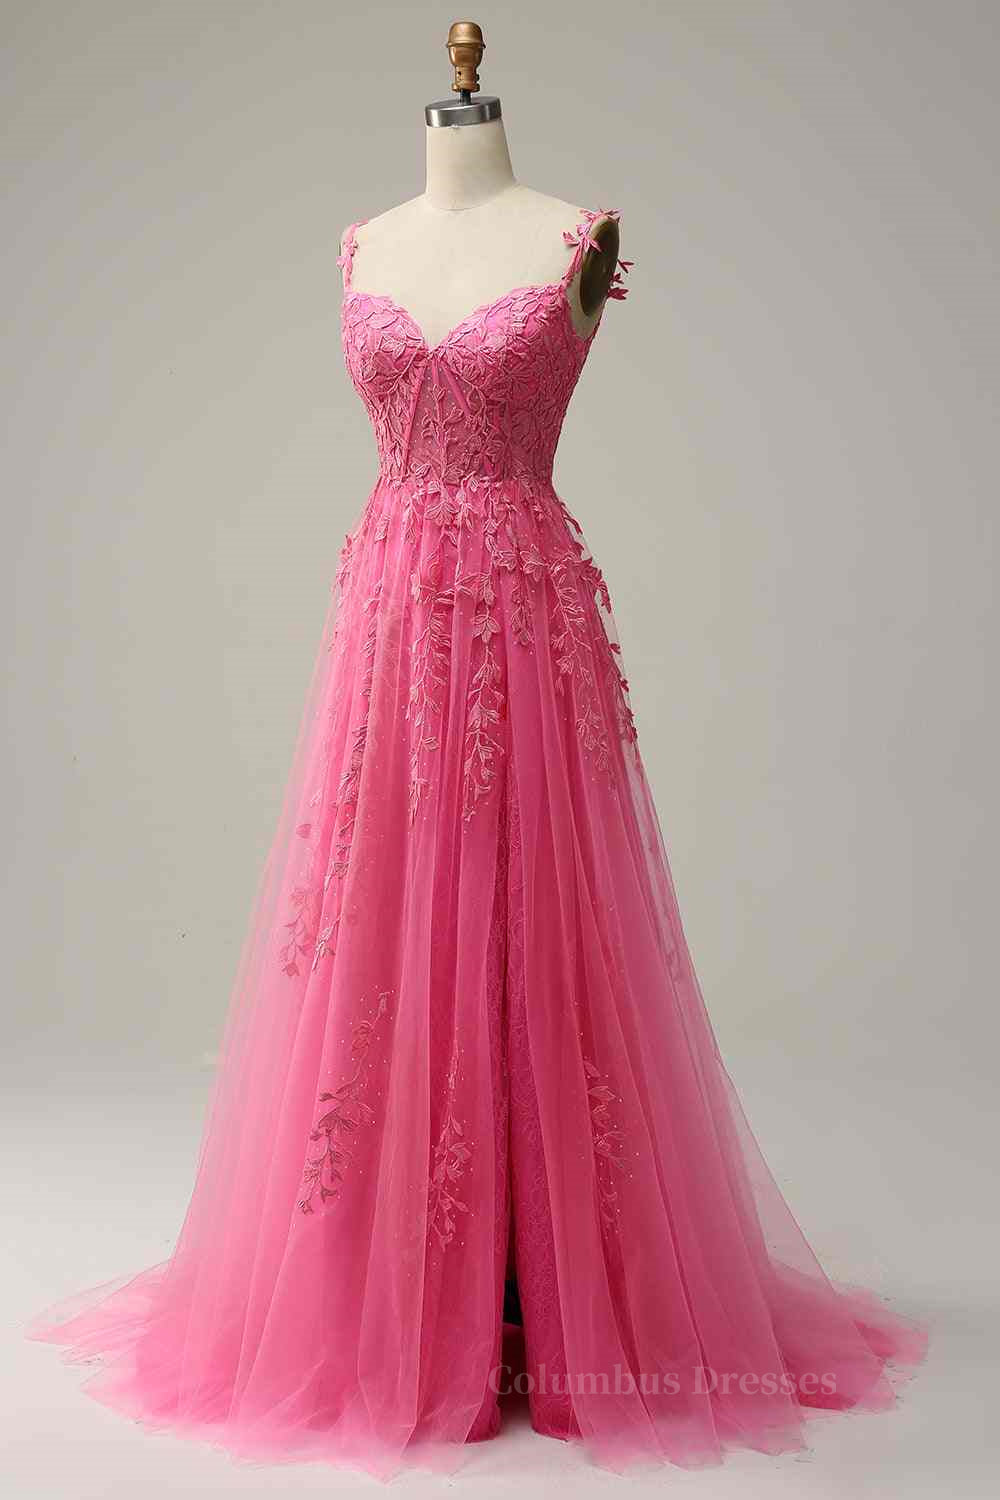 Classy Prom Dress, Fuchsia Dark Navy A-line Spaghetti Straps Tulle Lace Boning Long Prom Dress